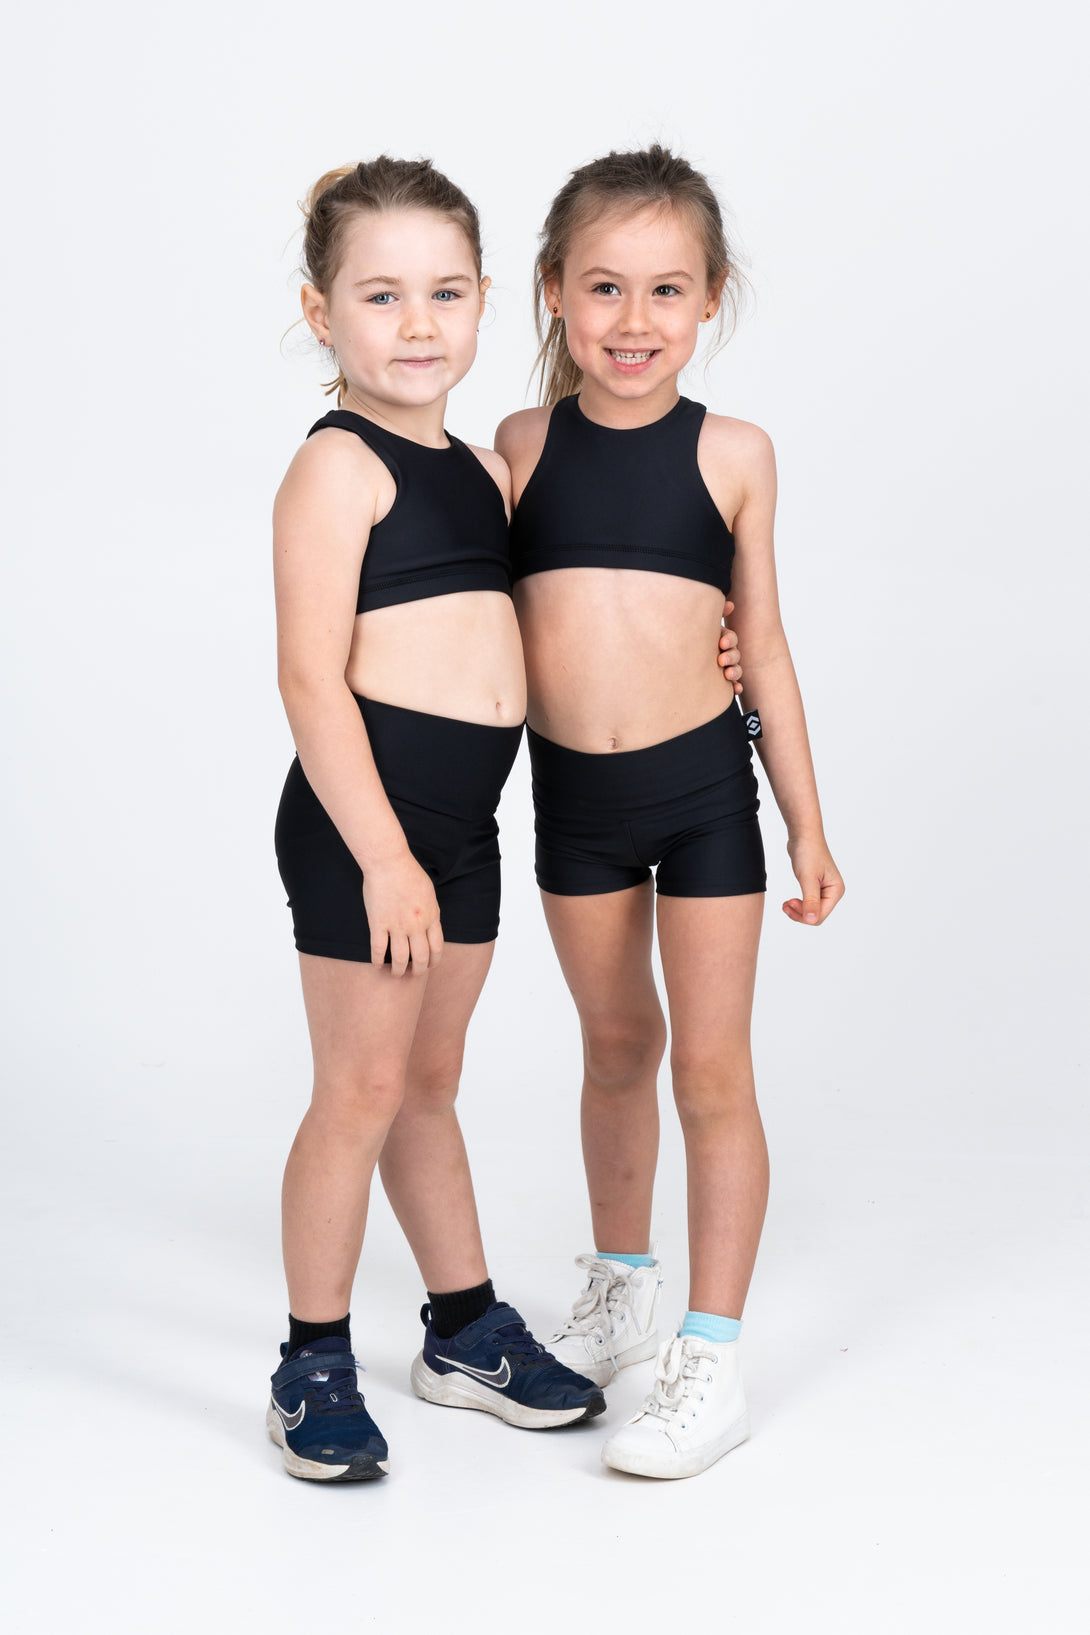 Black Performance - Kids Booty Shorts - Exoticathletica